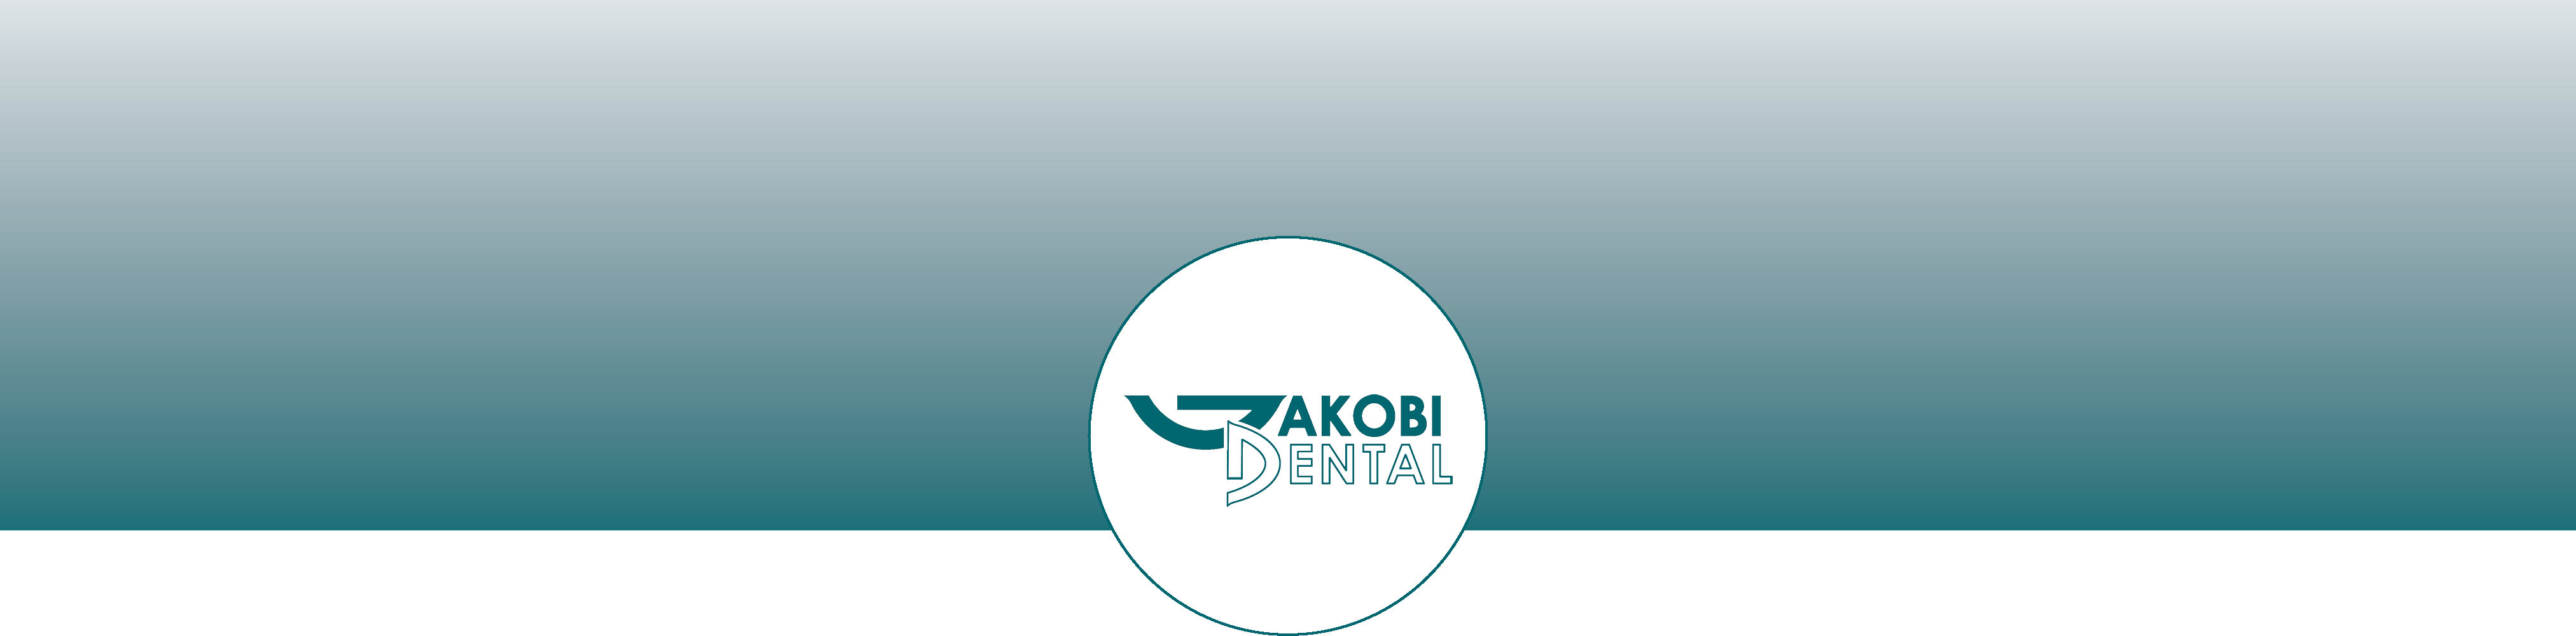 banner_jakobi-dental